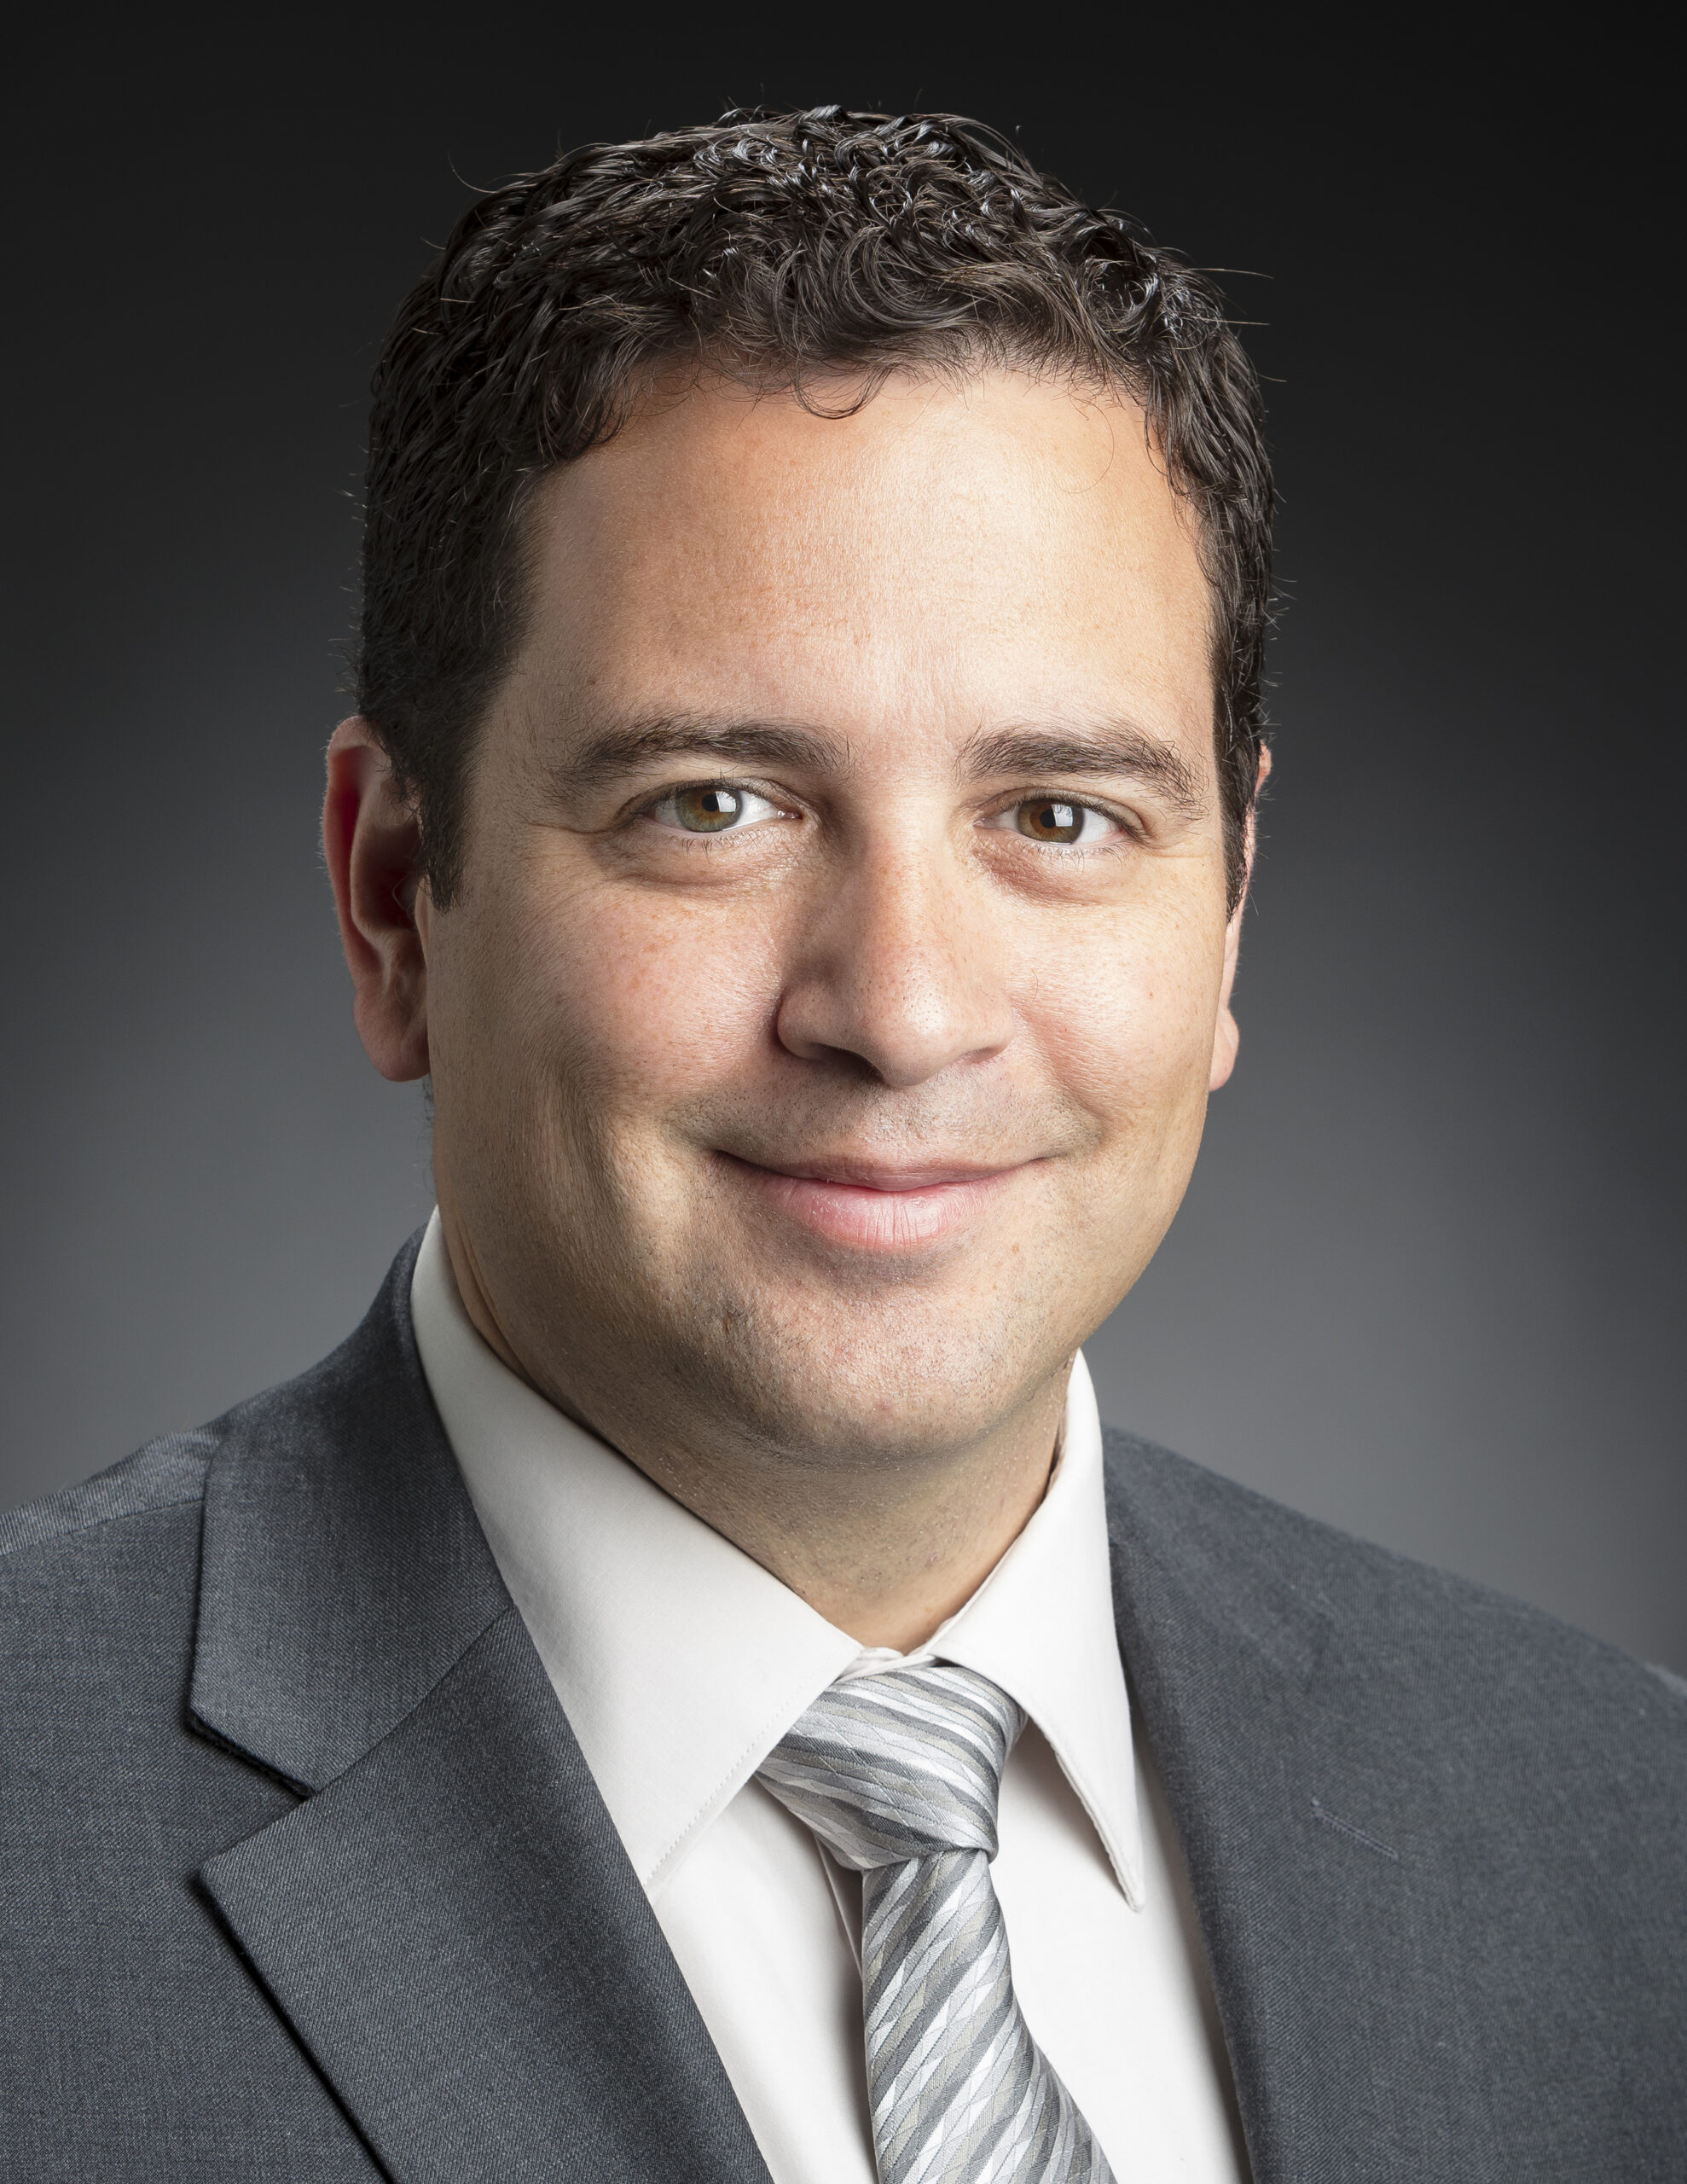 Profile photo of Kevin Ligozio in a grey suit with tie